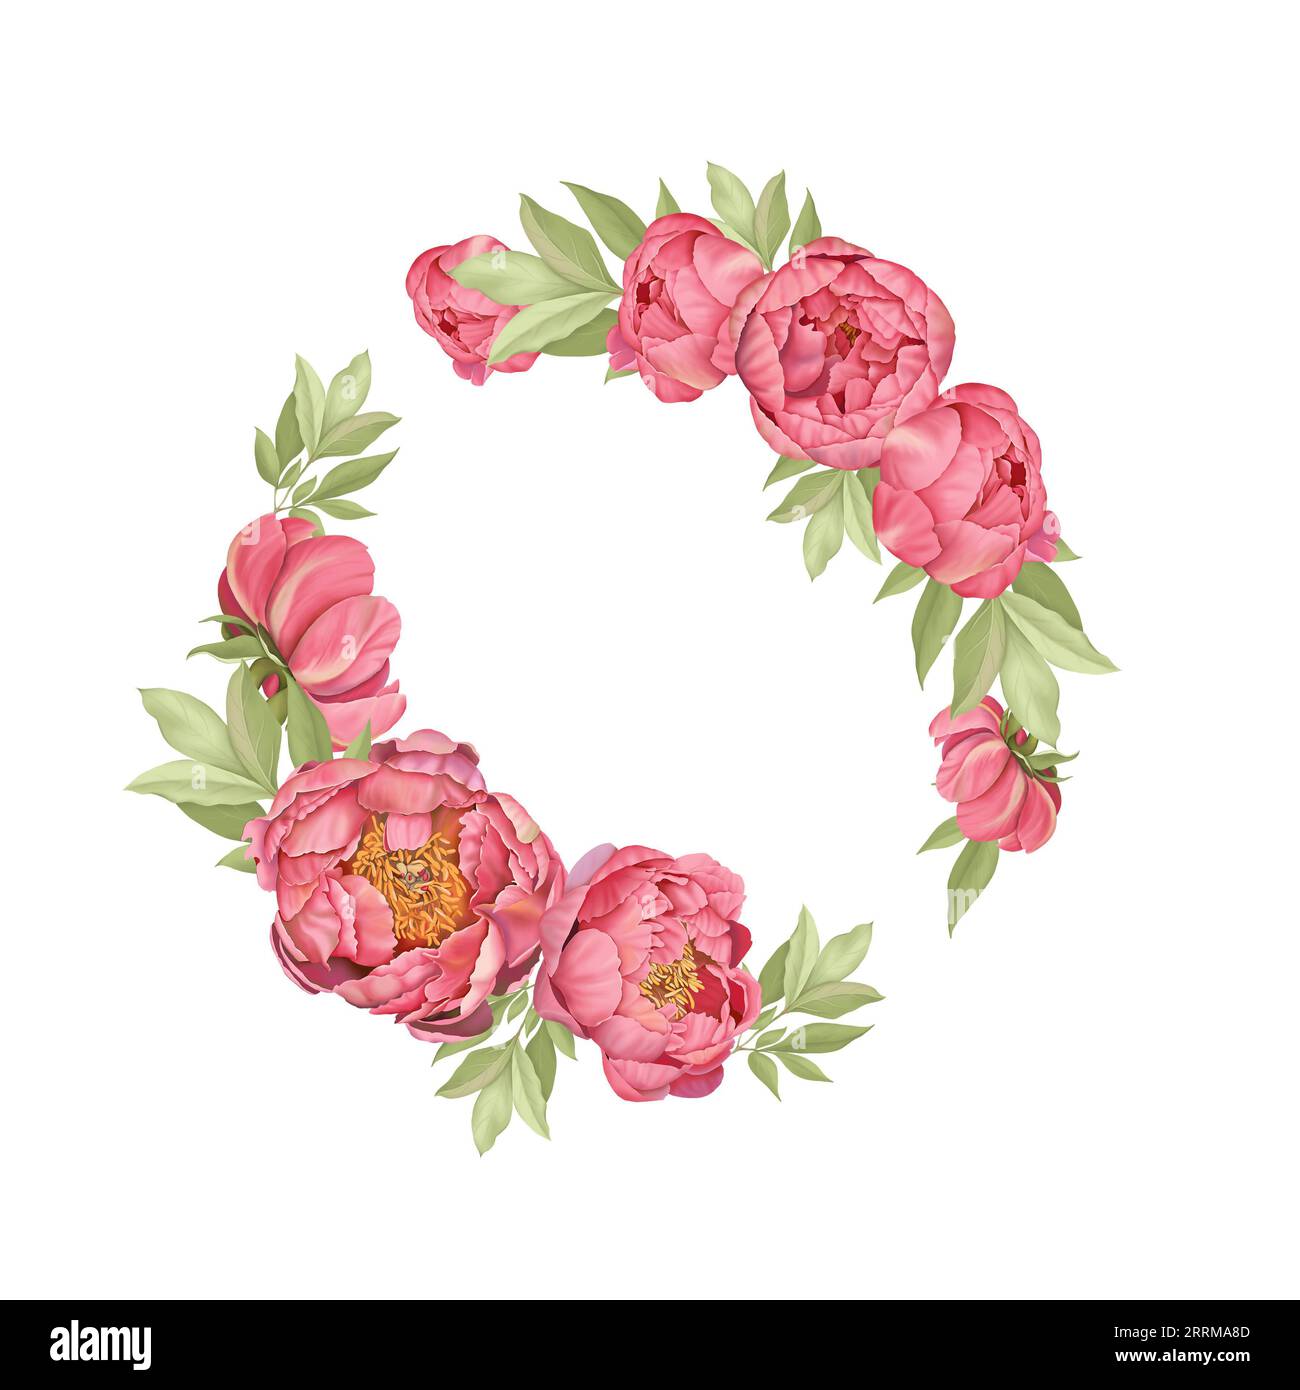 Pink hand-drawn peonies. Digital illustration. Flower wreath. Flower bouquets. Stock Photo